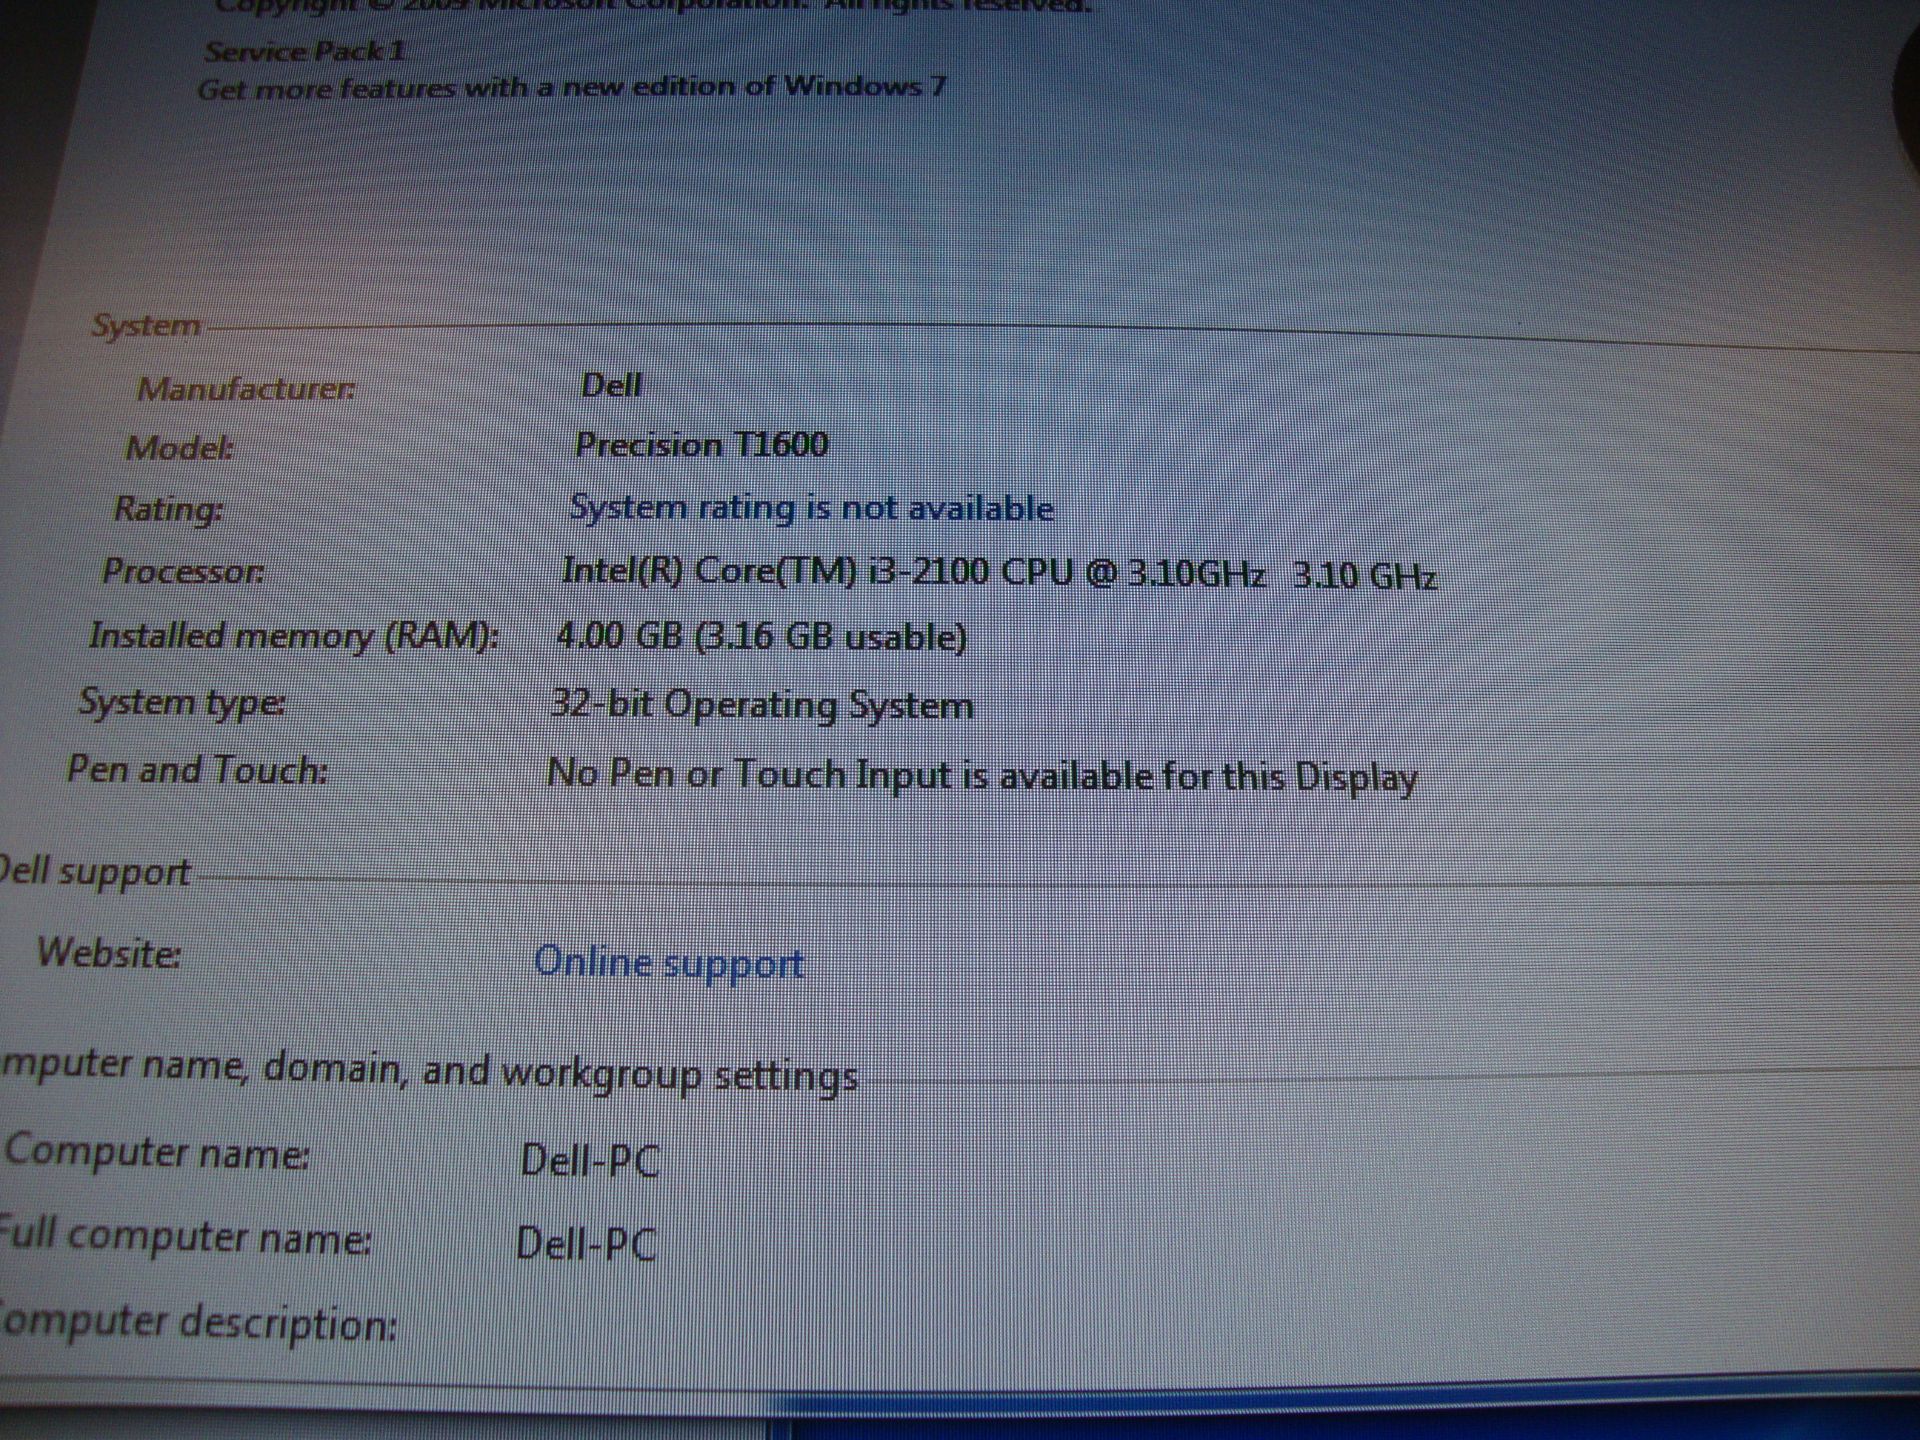 Dell Precision T1600 desktop Core i3 computer with Windows 7 including Dell widescreen LCD monitor - Image 4 of 9